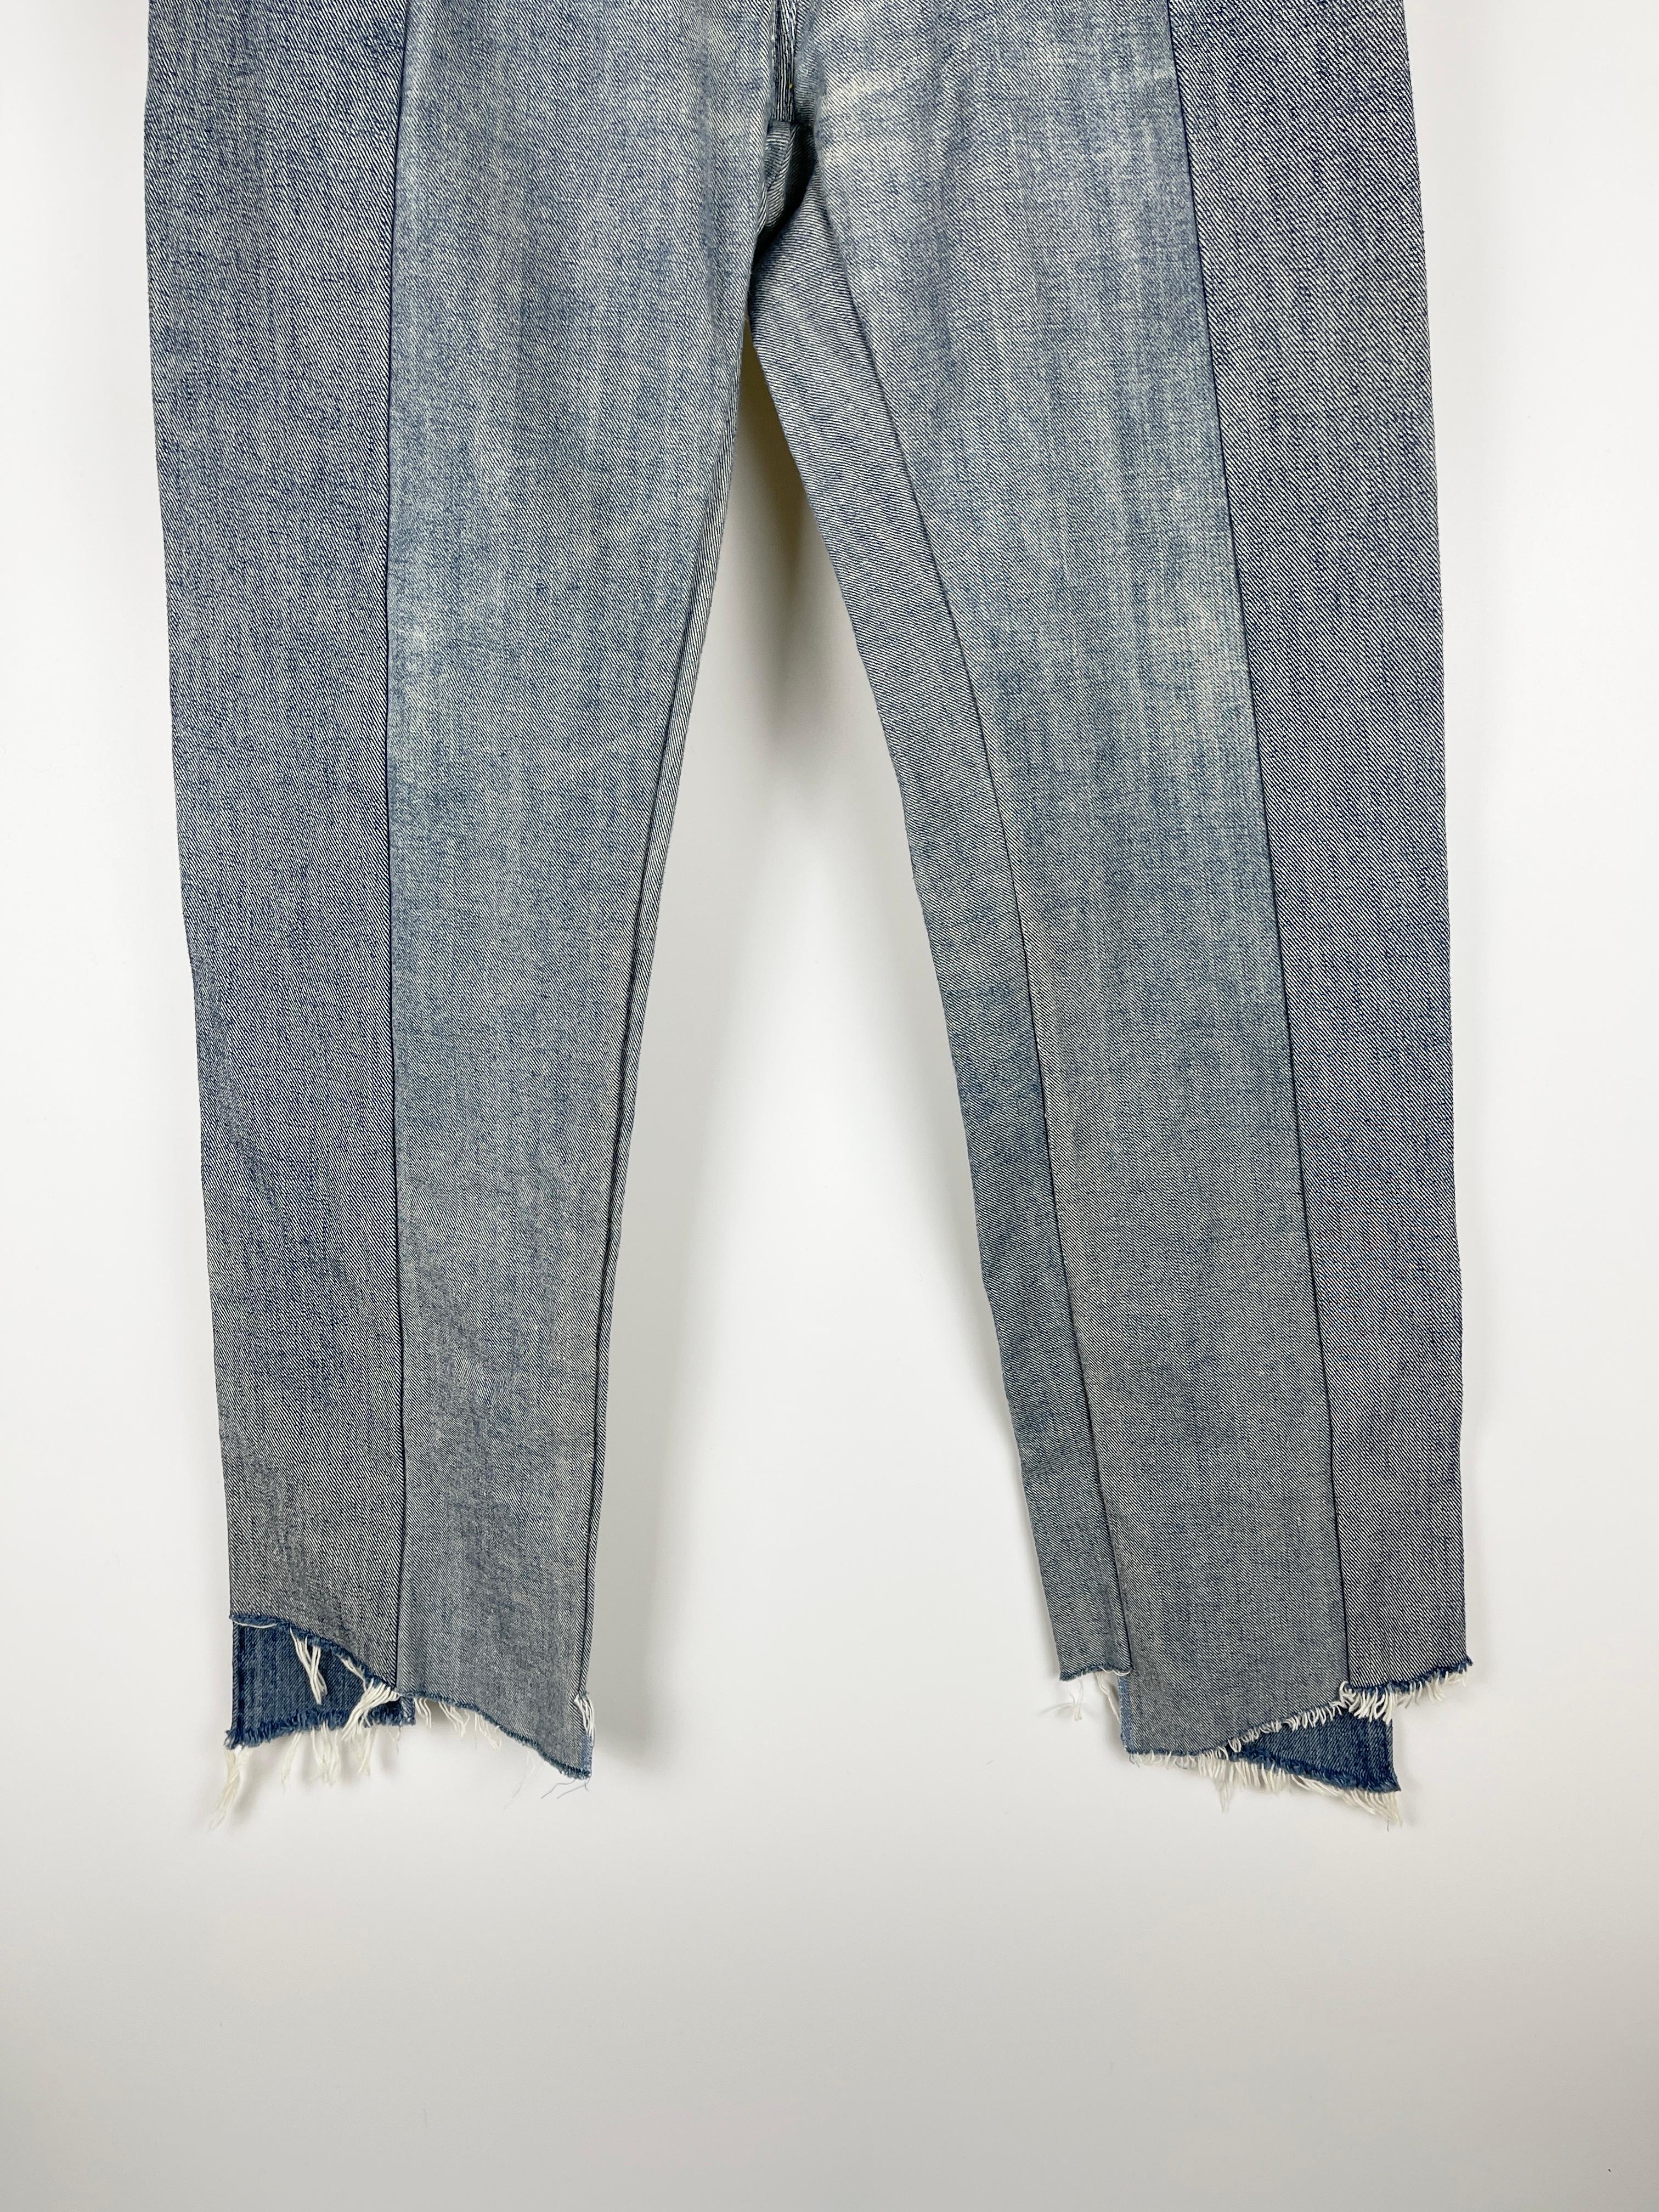 Vetements x Levi's 2017 Bearbeitete Jeans im Angebot 6